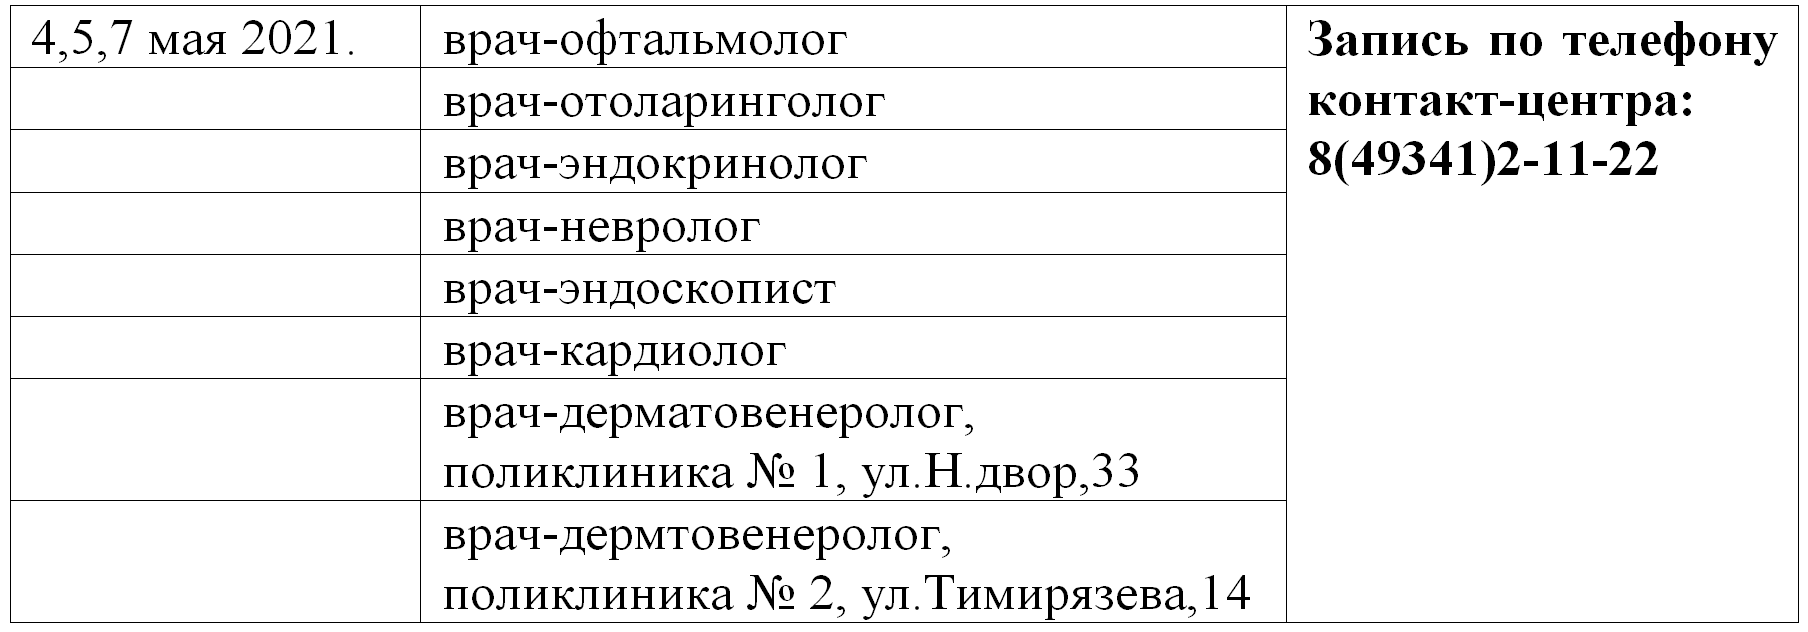 Телефон регистратуры поликлиники 3 краснодар. Регистратура поликлиники.